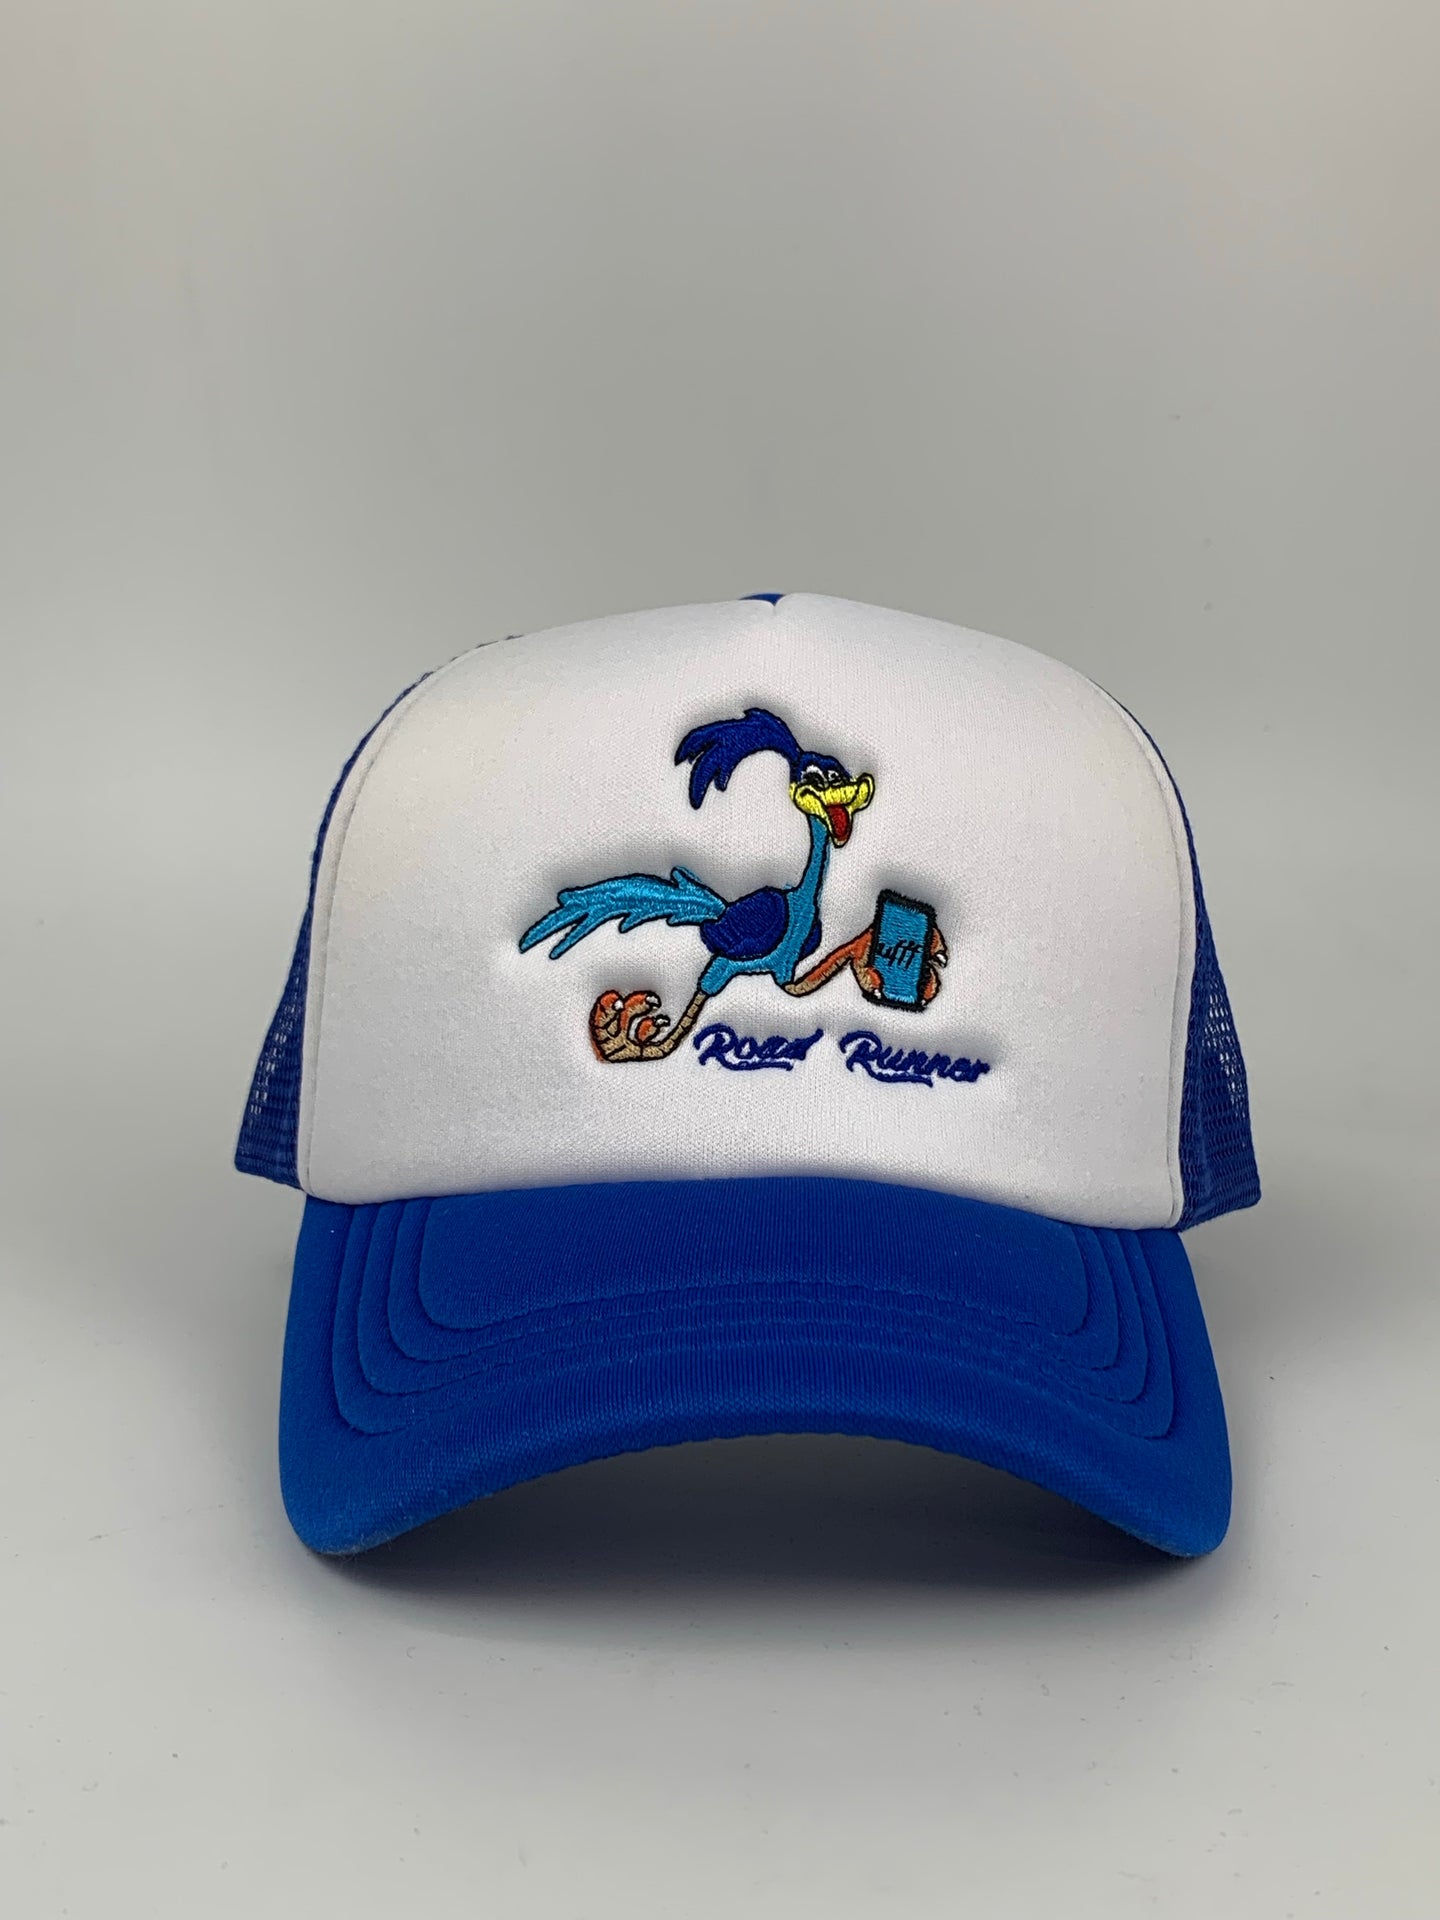 Road Runner Trucker Hat (Blue)